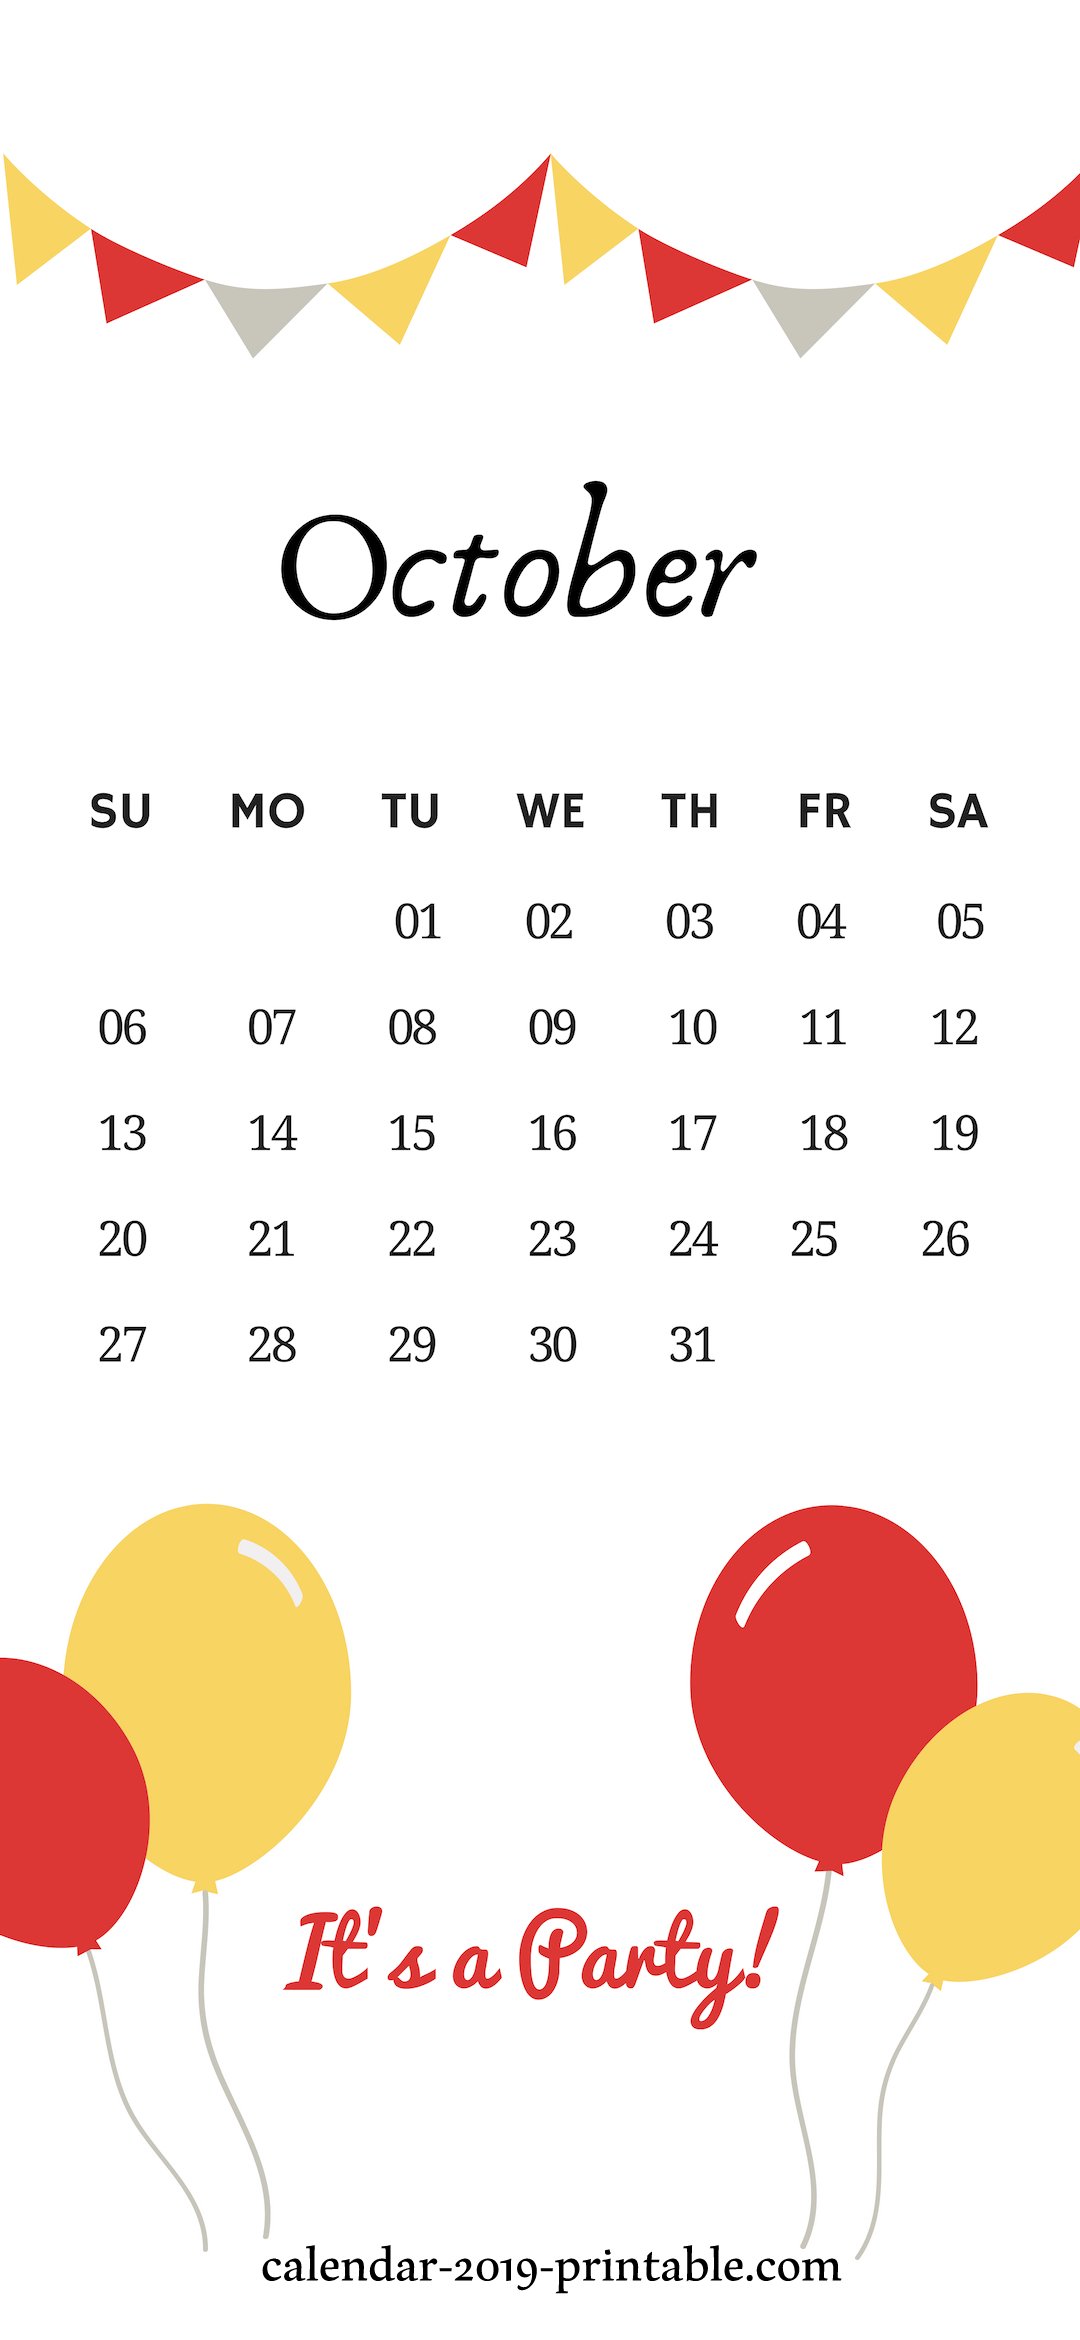 October 2019 Iphone Calendar Wallpaper - Number - HD Wallpaper 